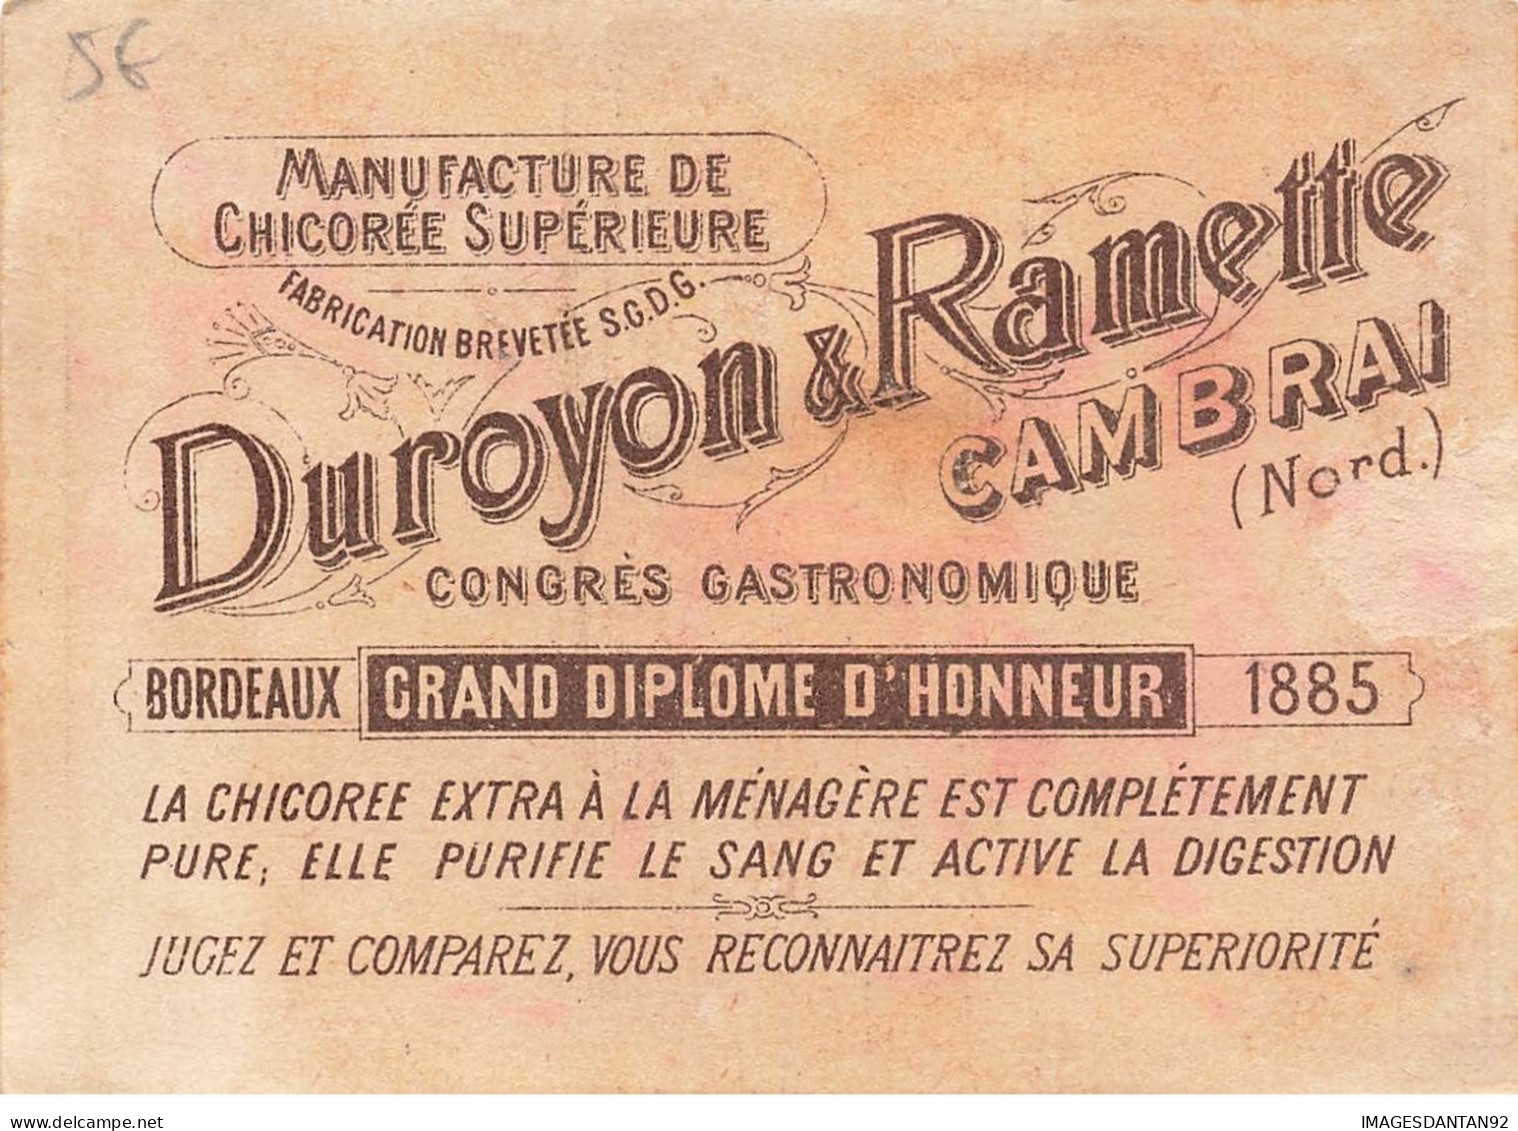 CAMBRAI DUROYON RAMETTE CHOCOLAT CHICOREE MENAGERE BORDEAUX 1885 PEINTRE ARTISTE BINOCLE - Duroyon & Ramette